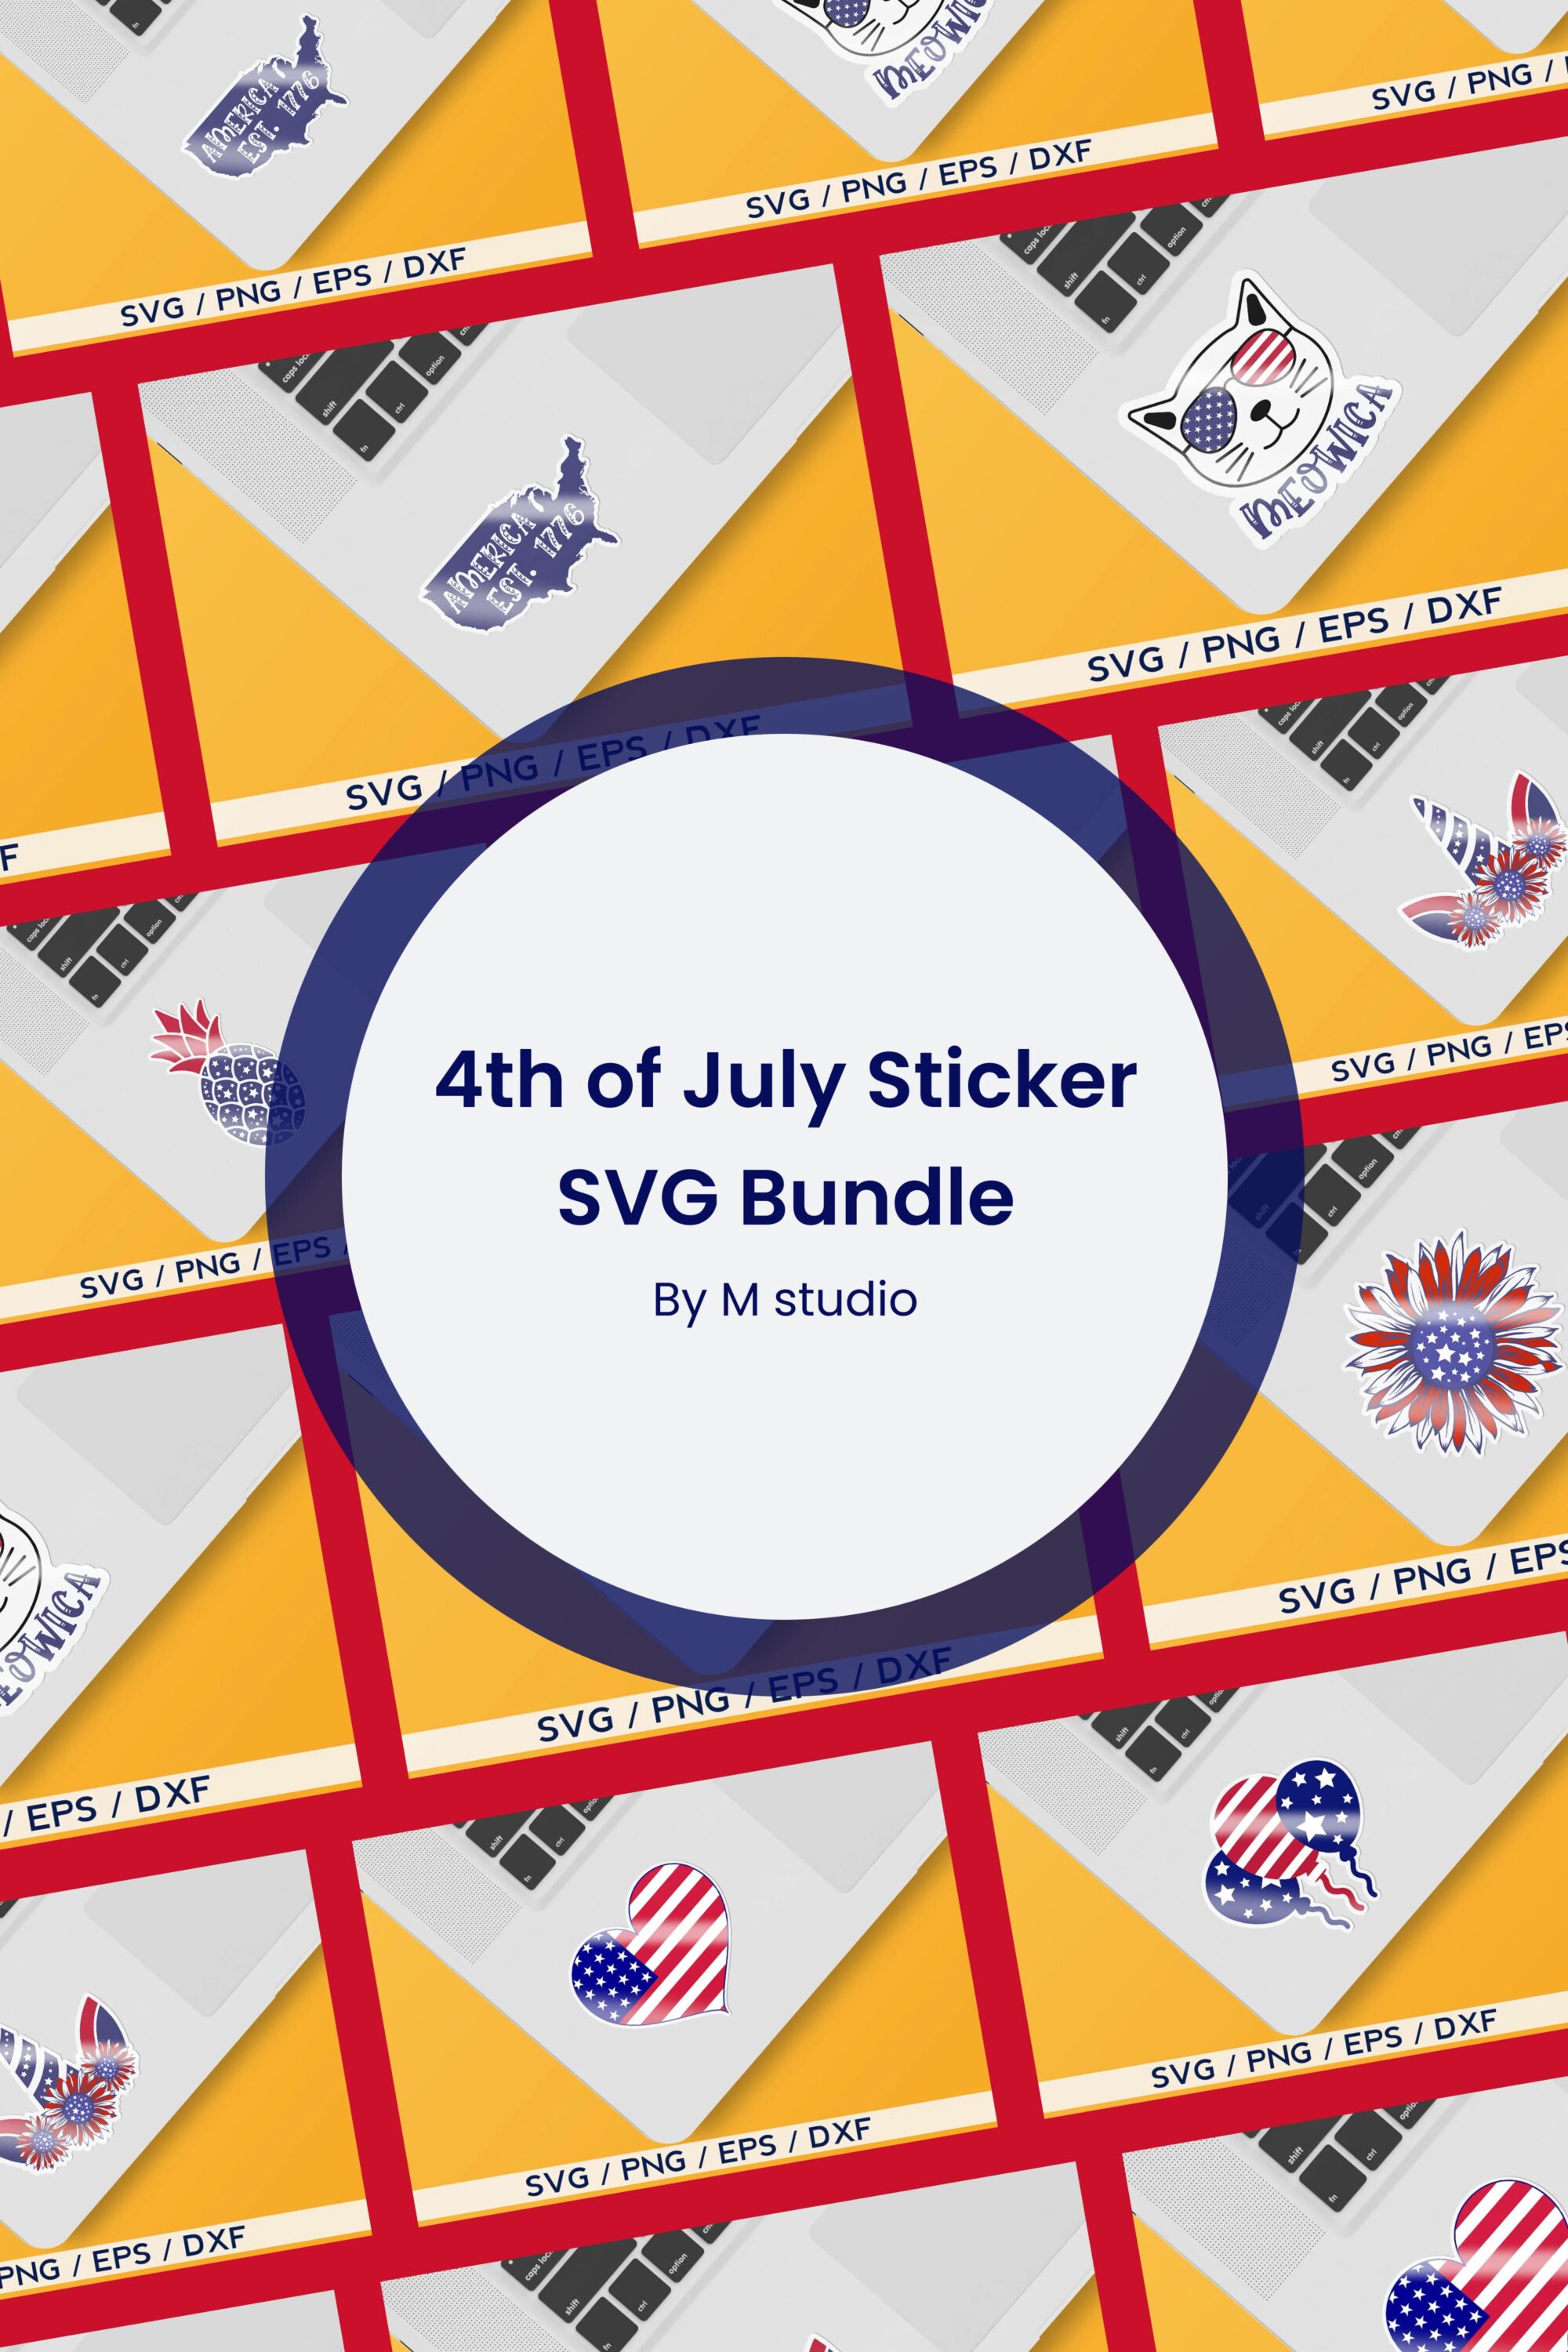 4th of July Sticker SVG Bundle pinterest image.